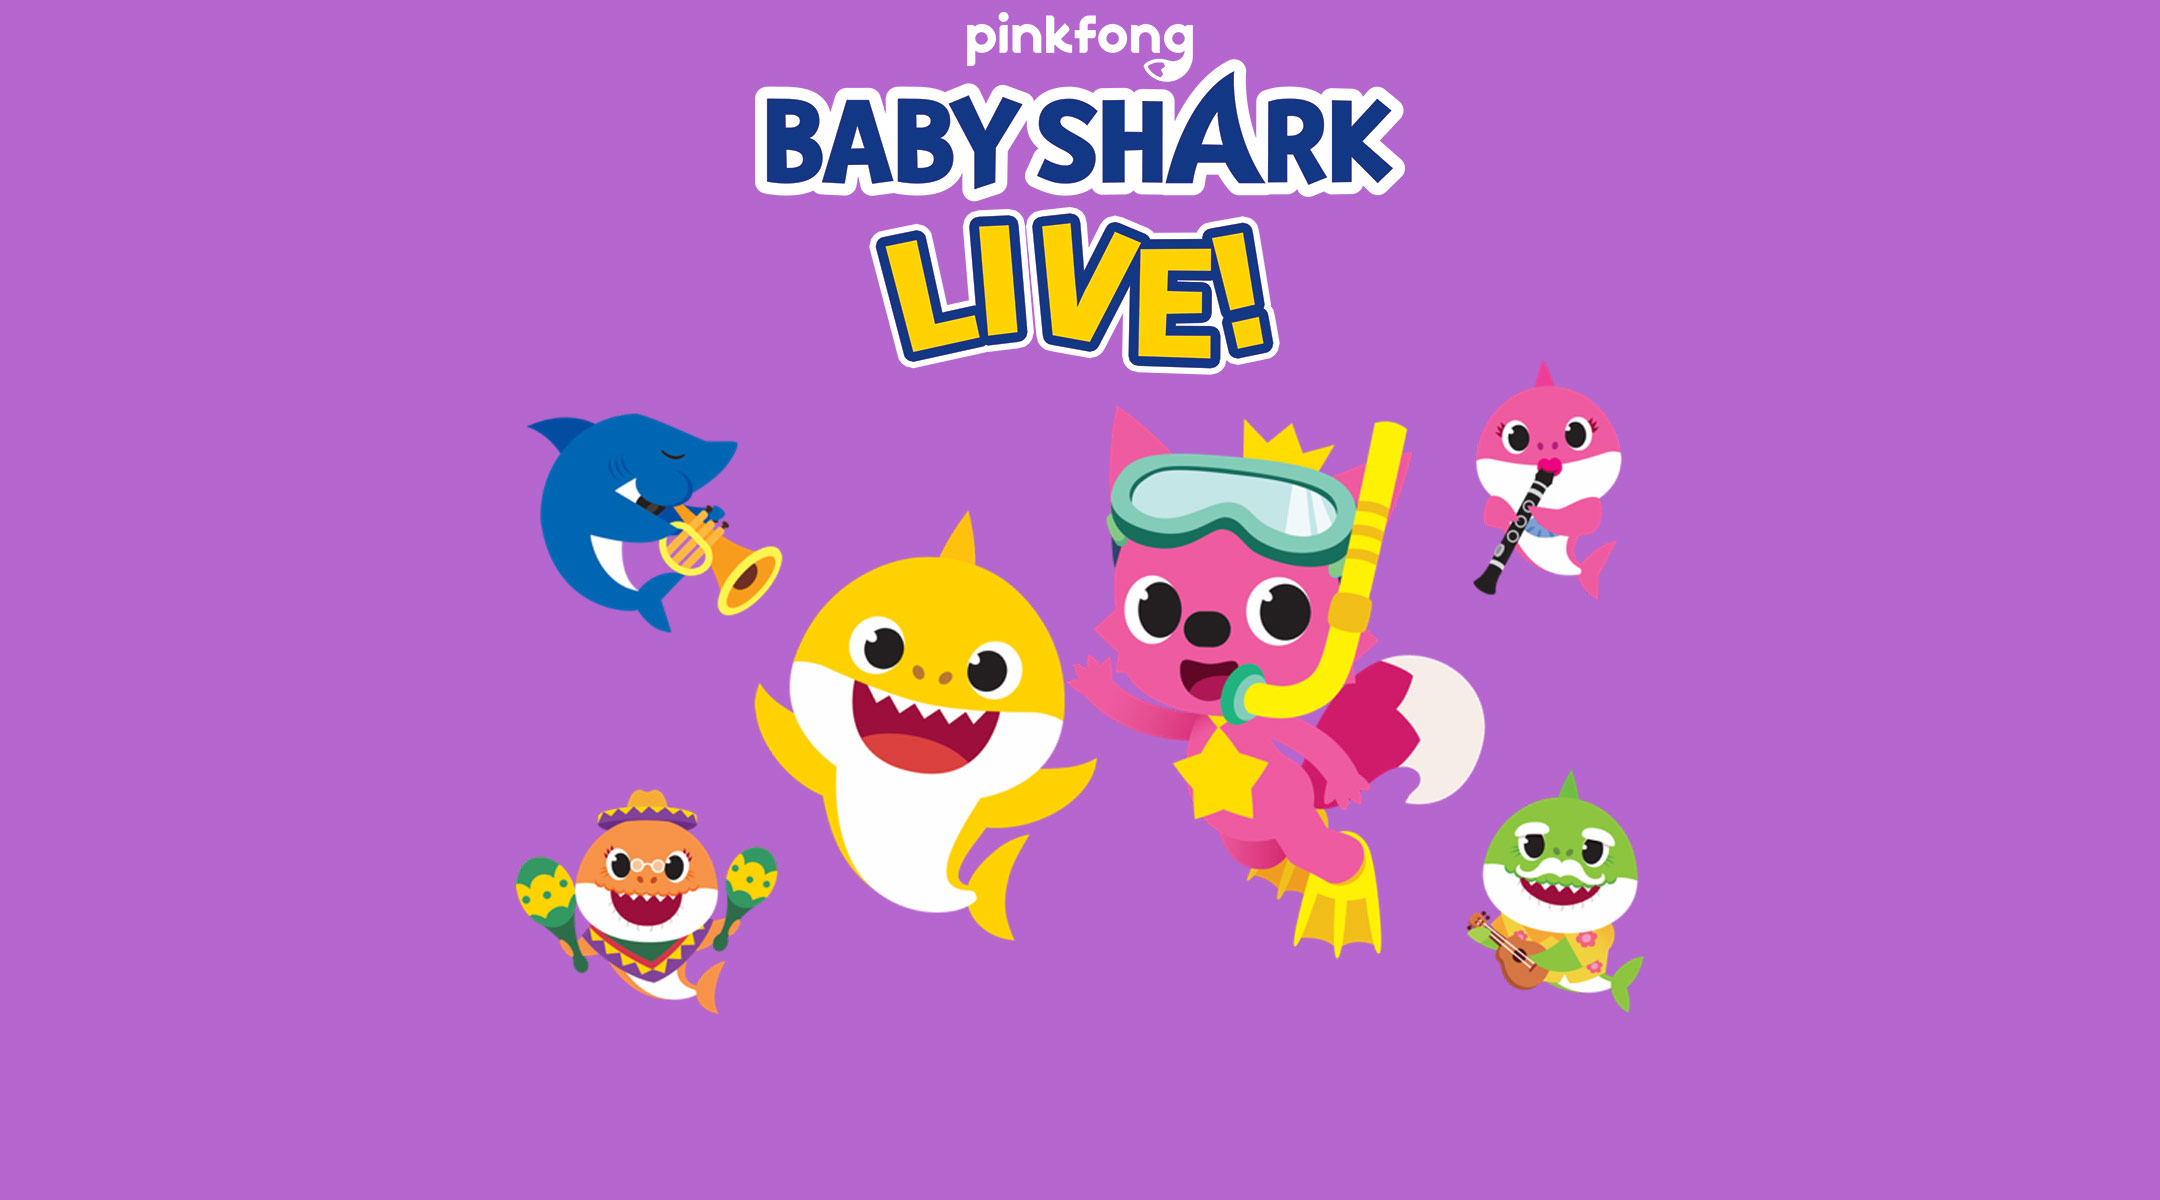 baby shark now has live performances